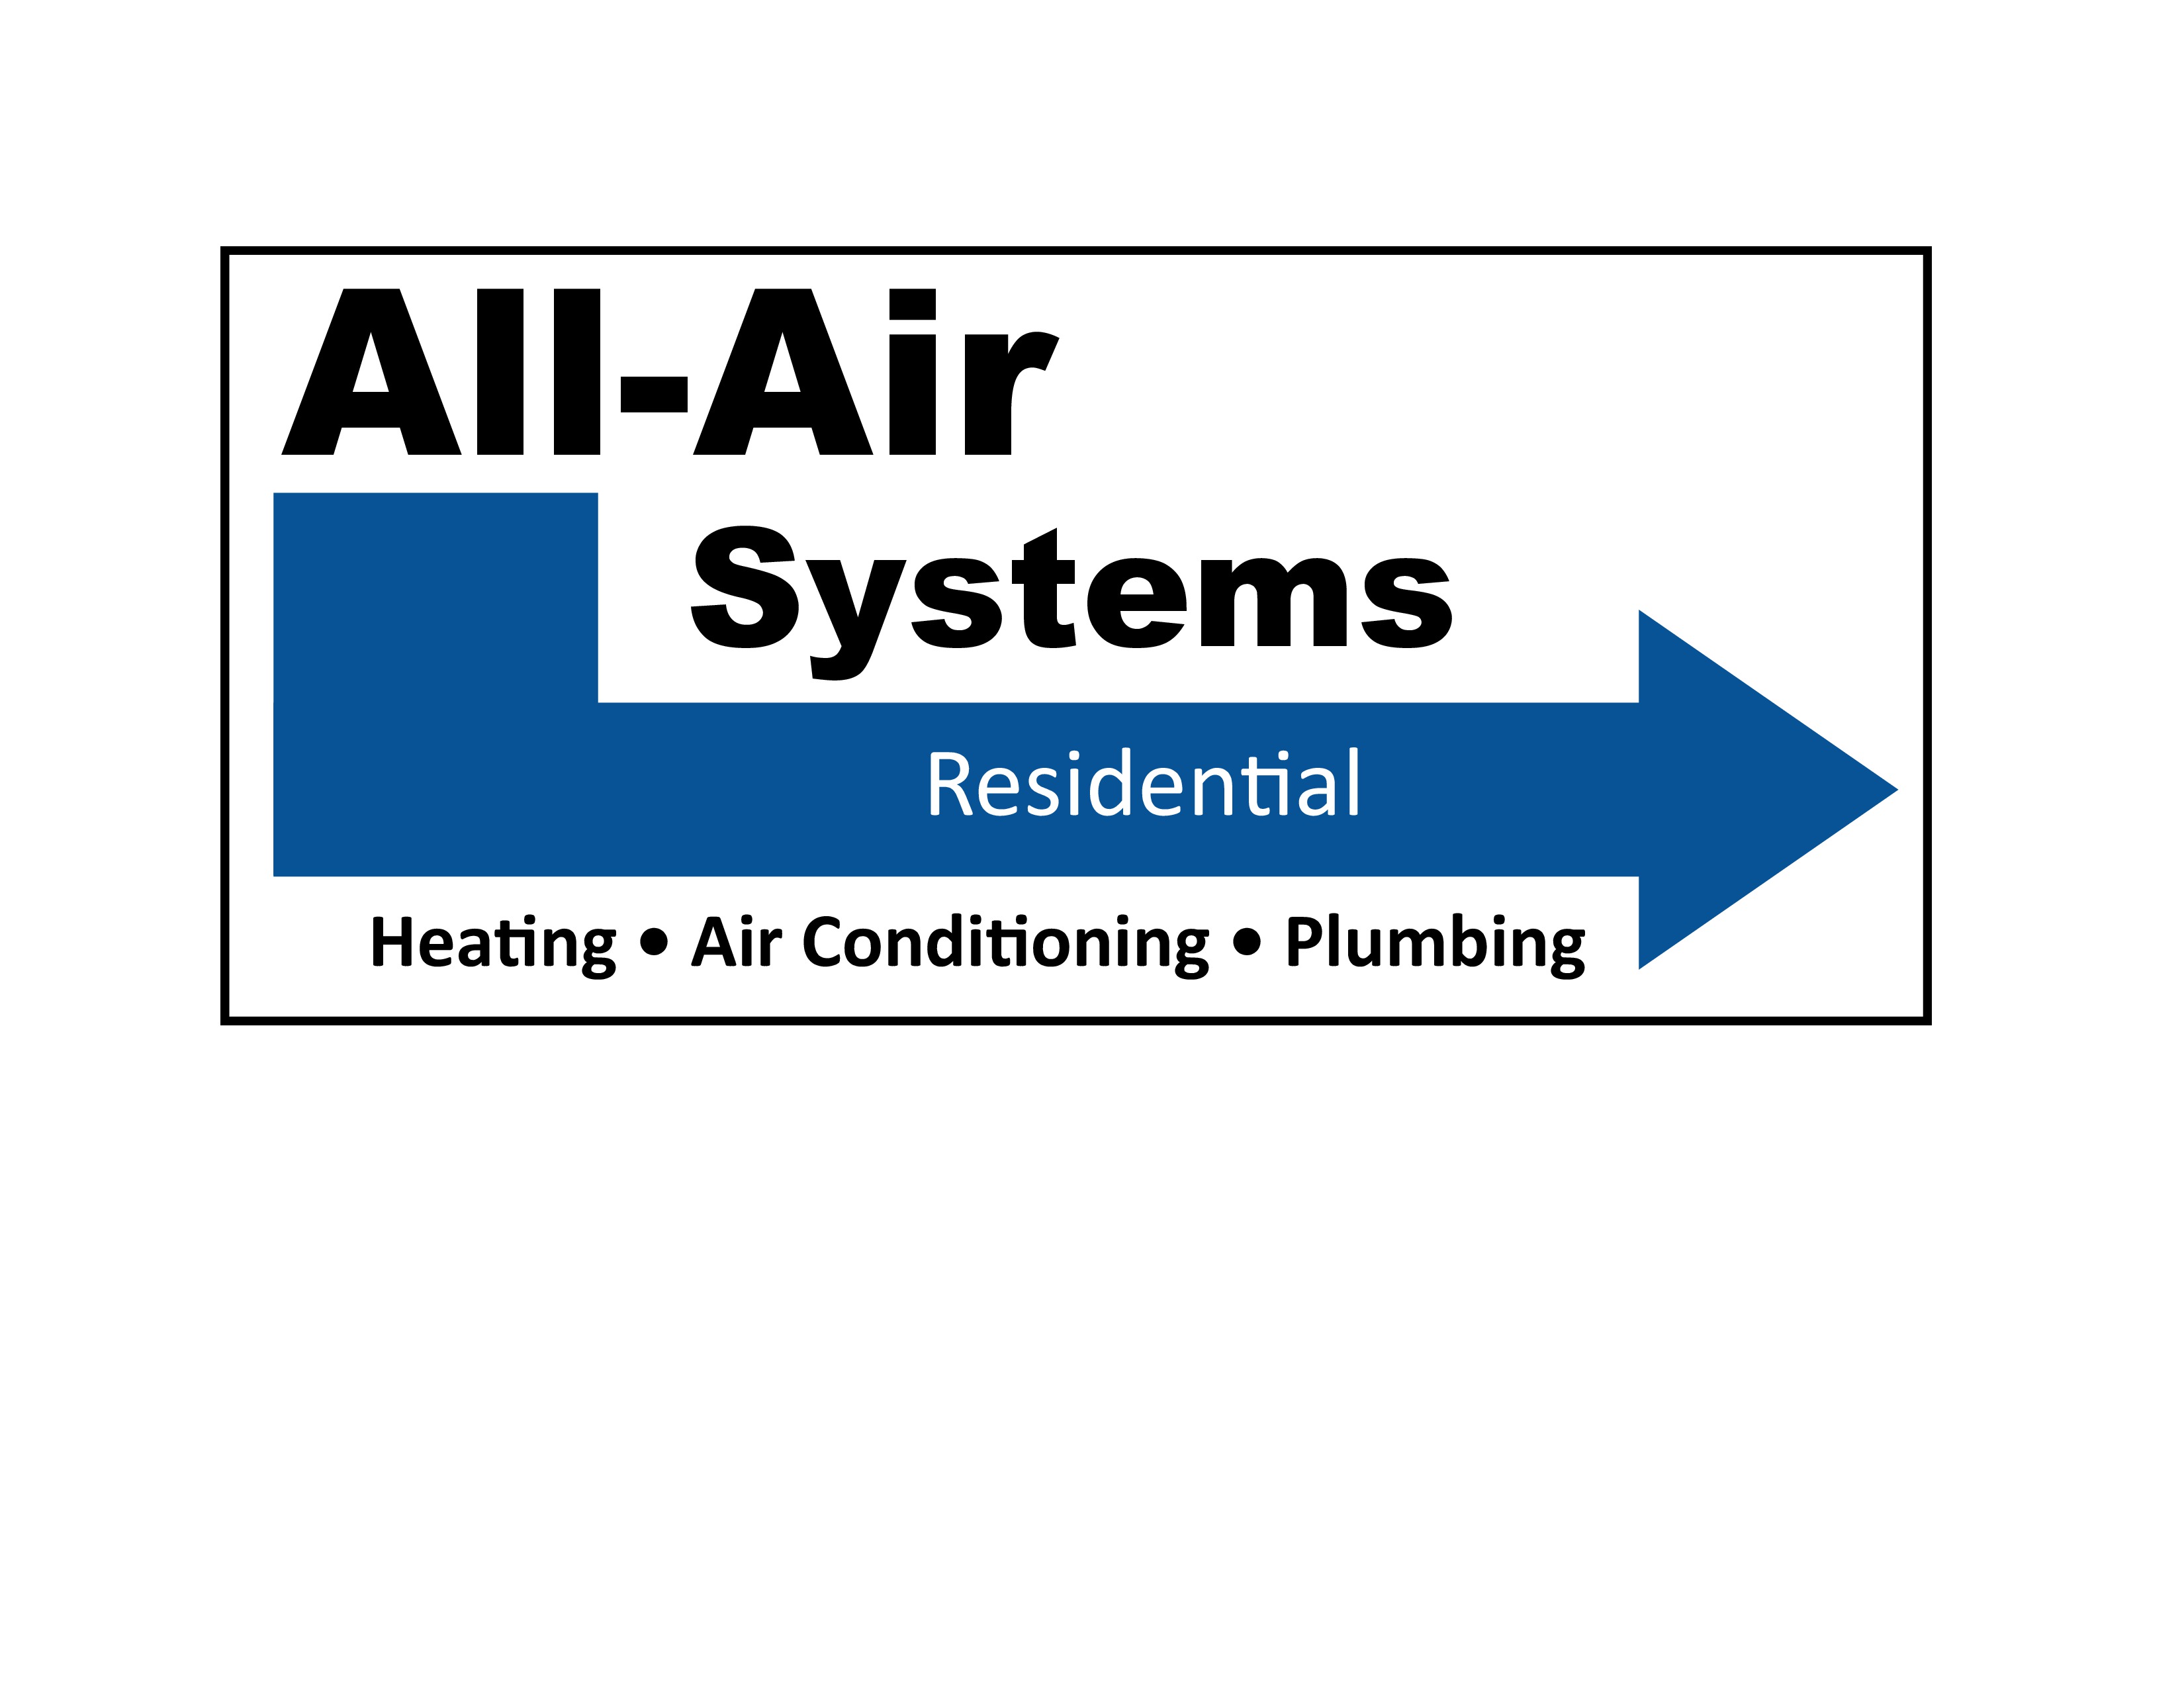 All-Air Systems